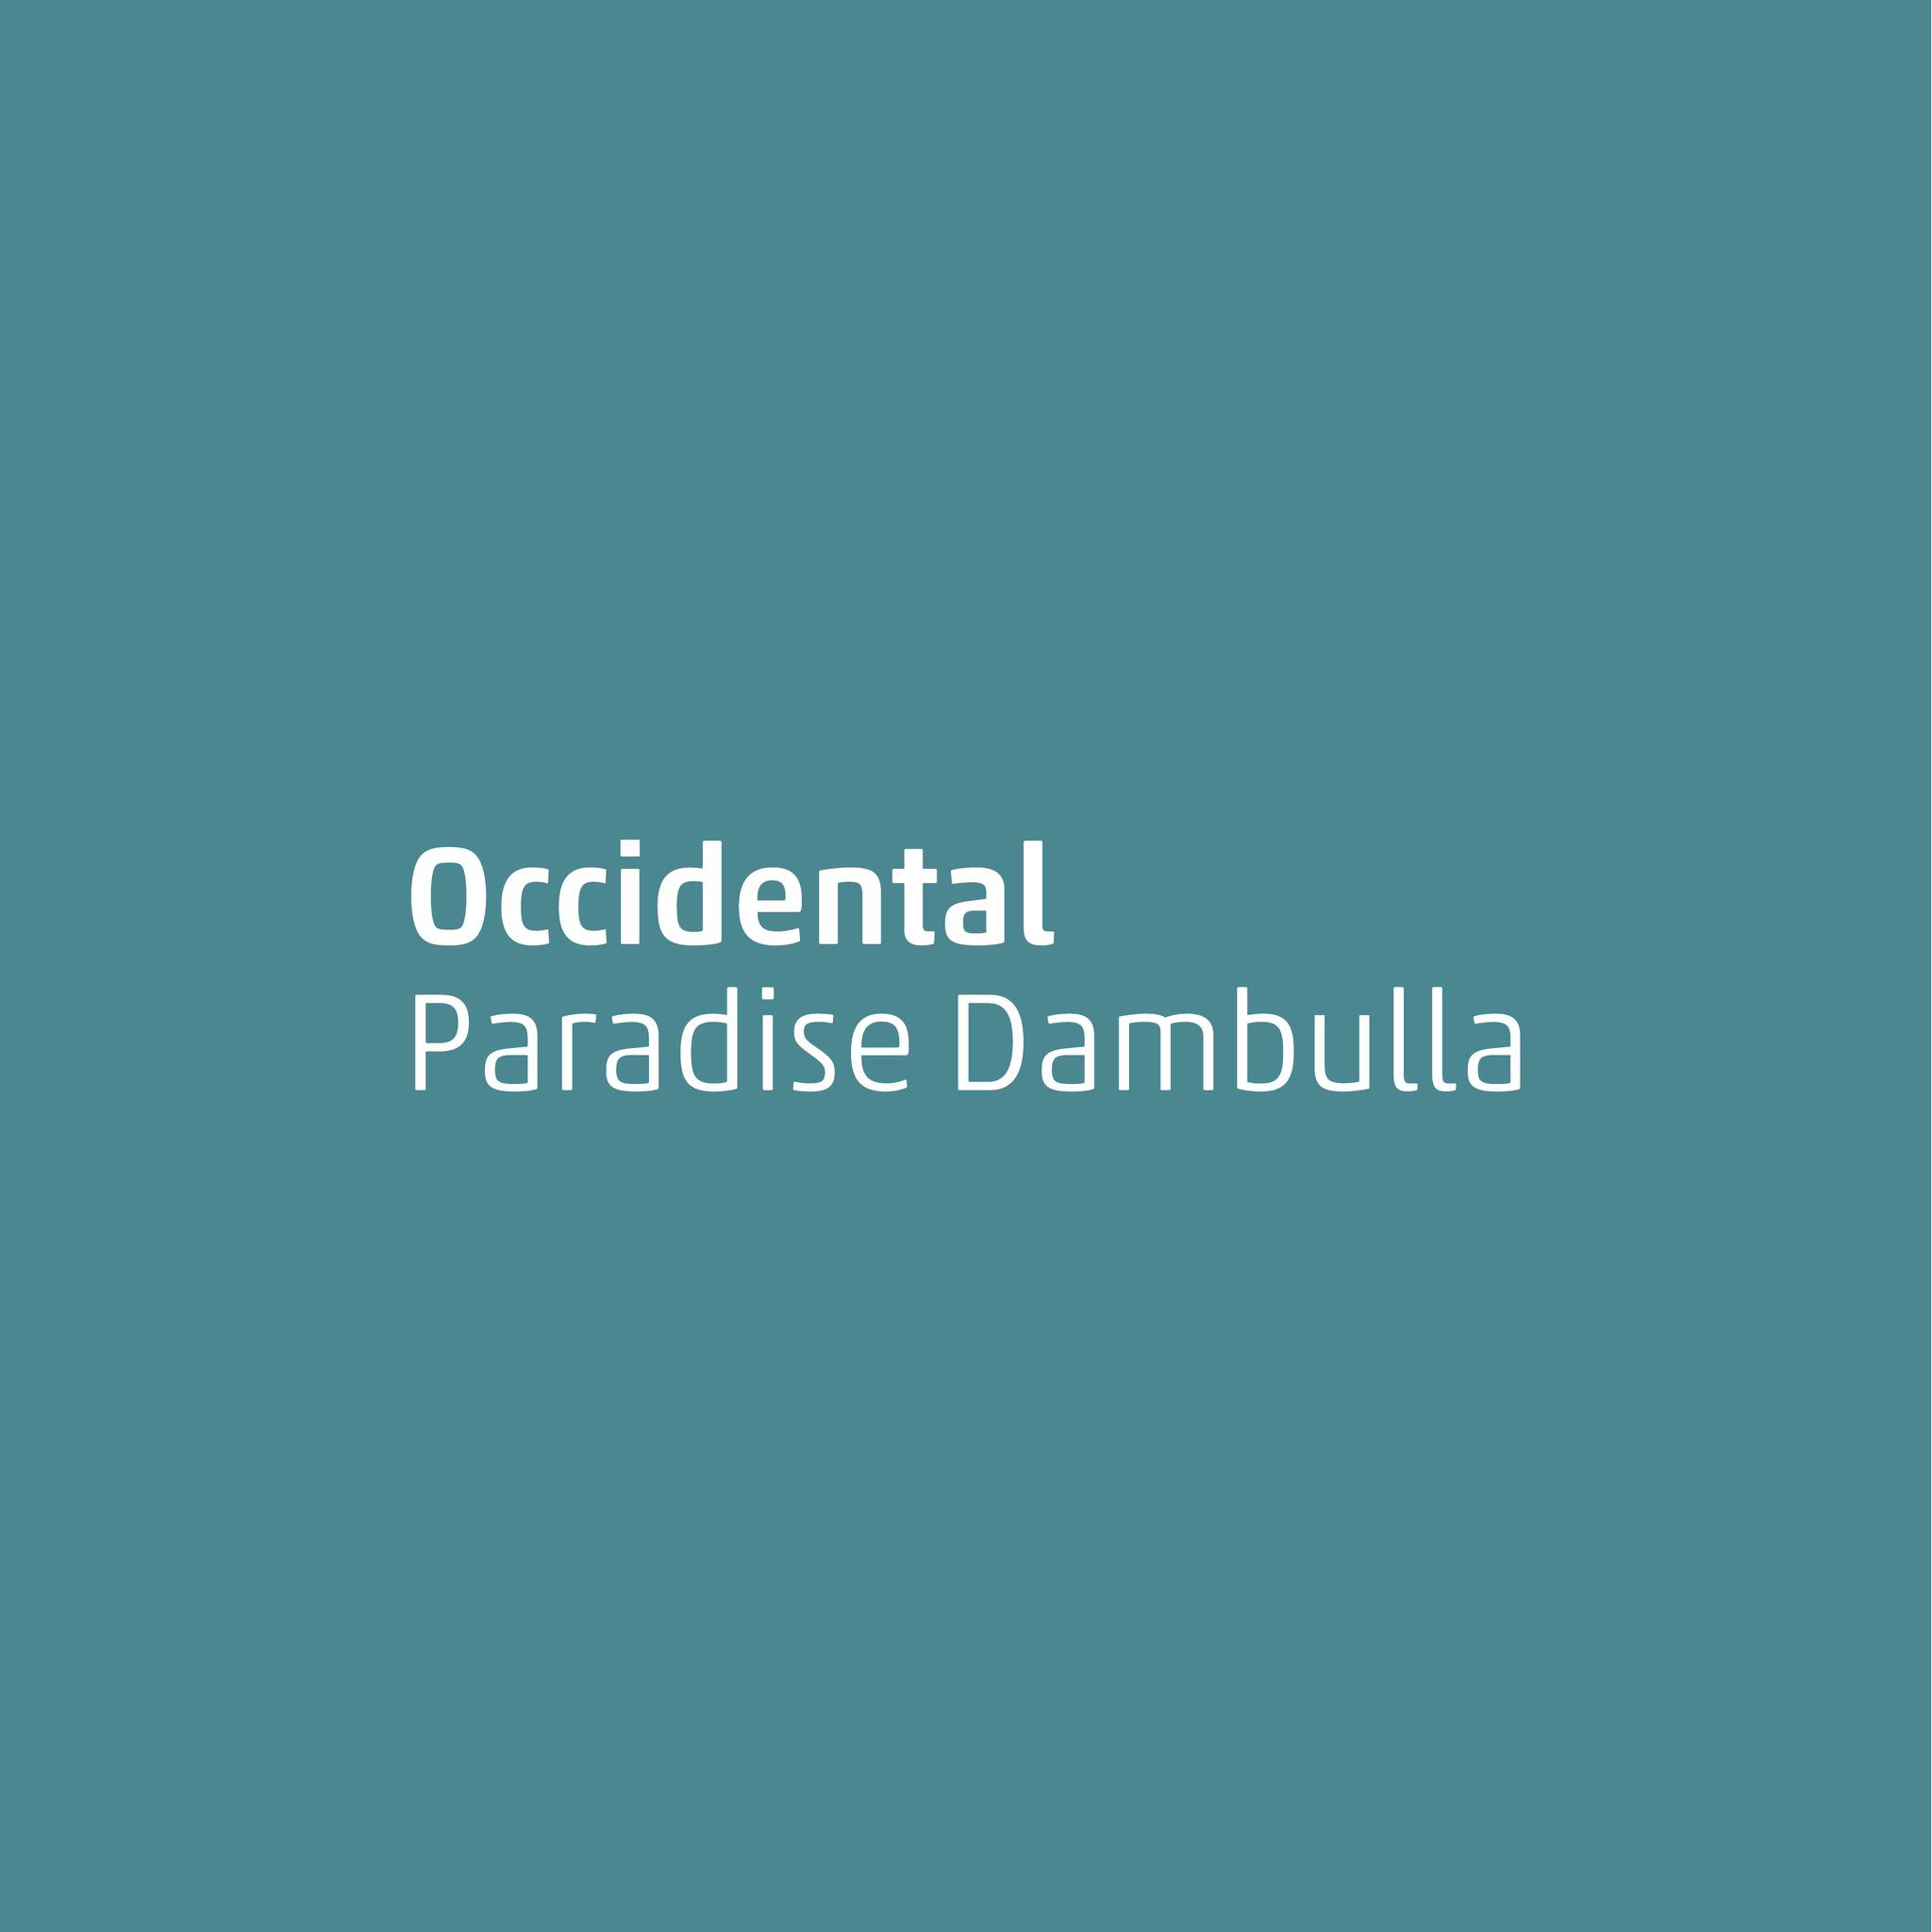 Occidental Paradise Dambulla